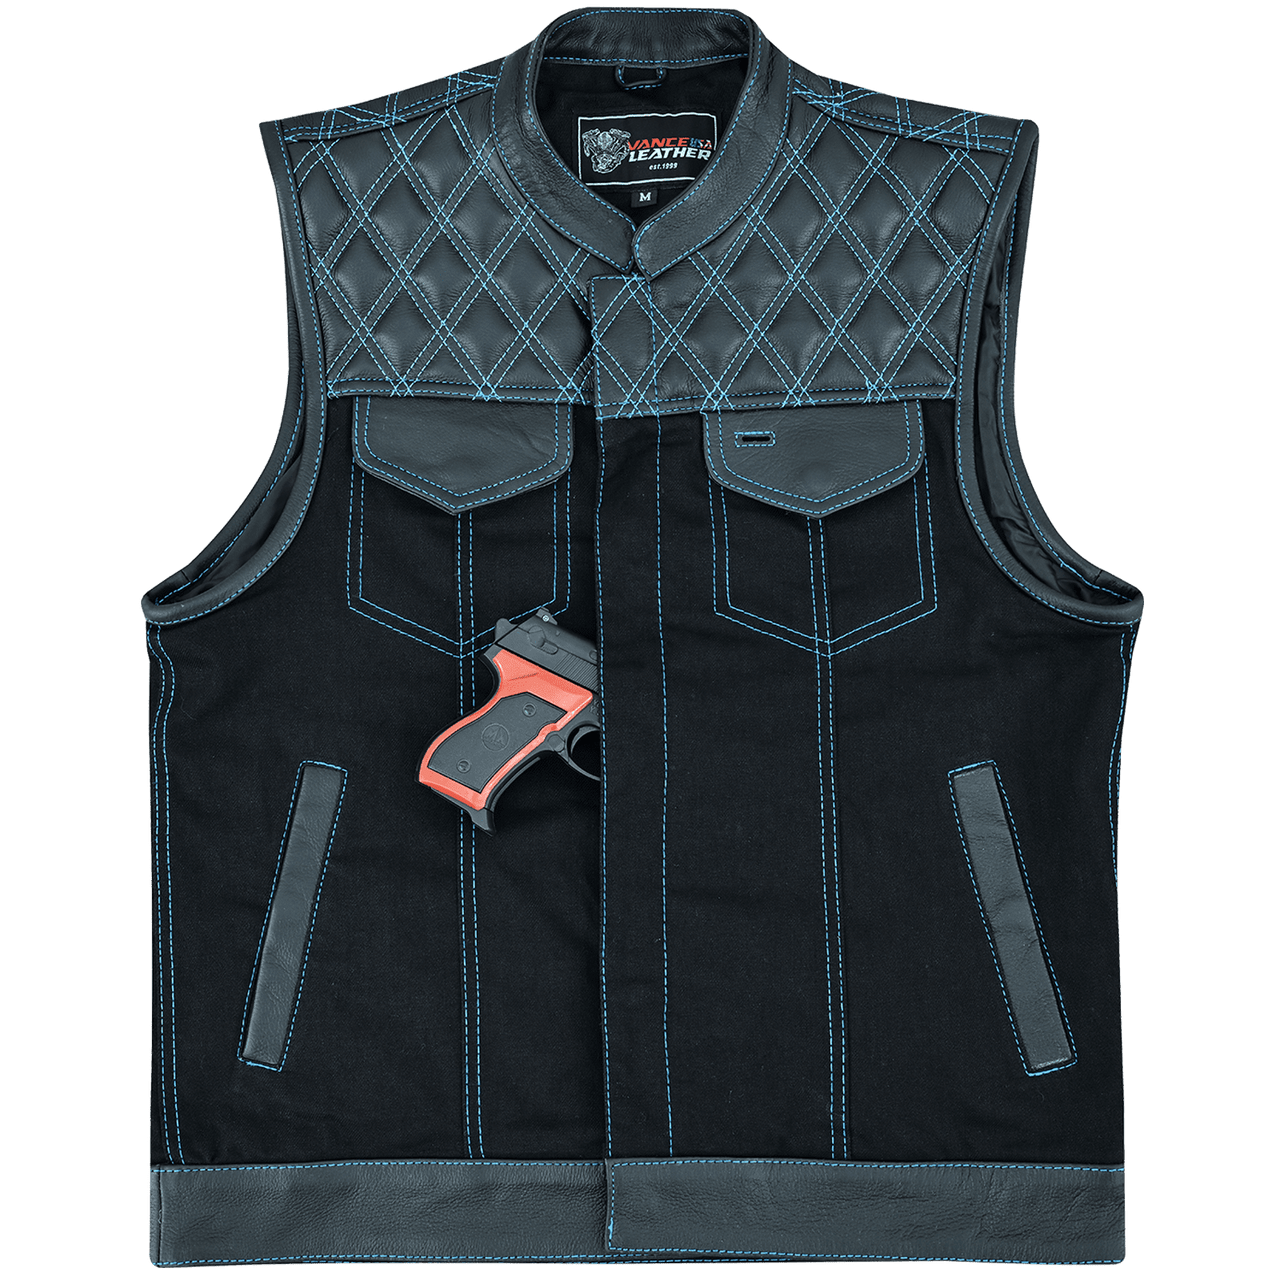 Vance-Leathers-VB924BL-Men's-Denim-Leather-Motorcycle-Vest-with-Blue-Stitching-inside-pocket